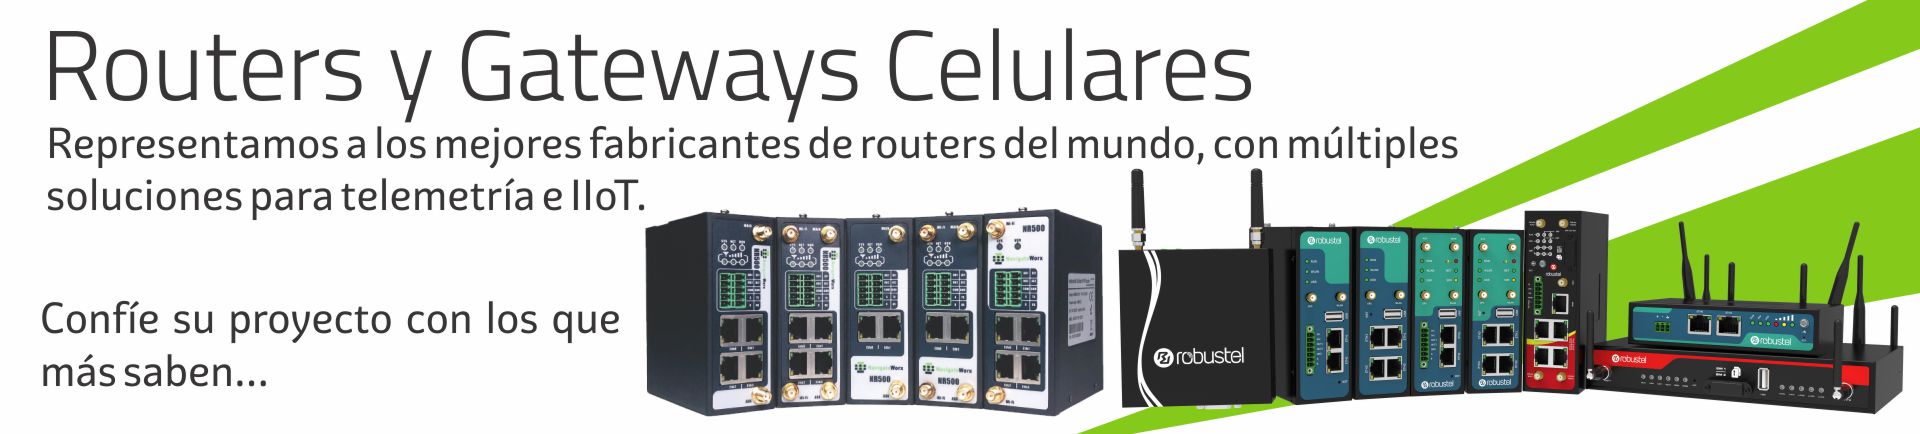 Routers y gateways